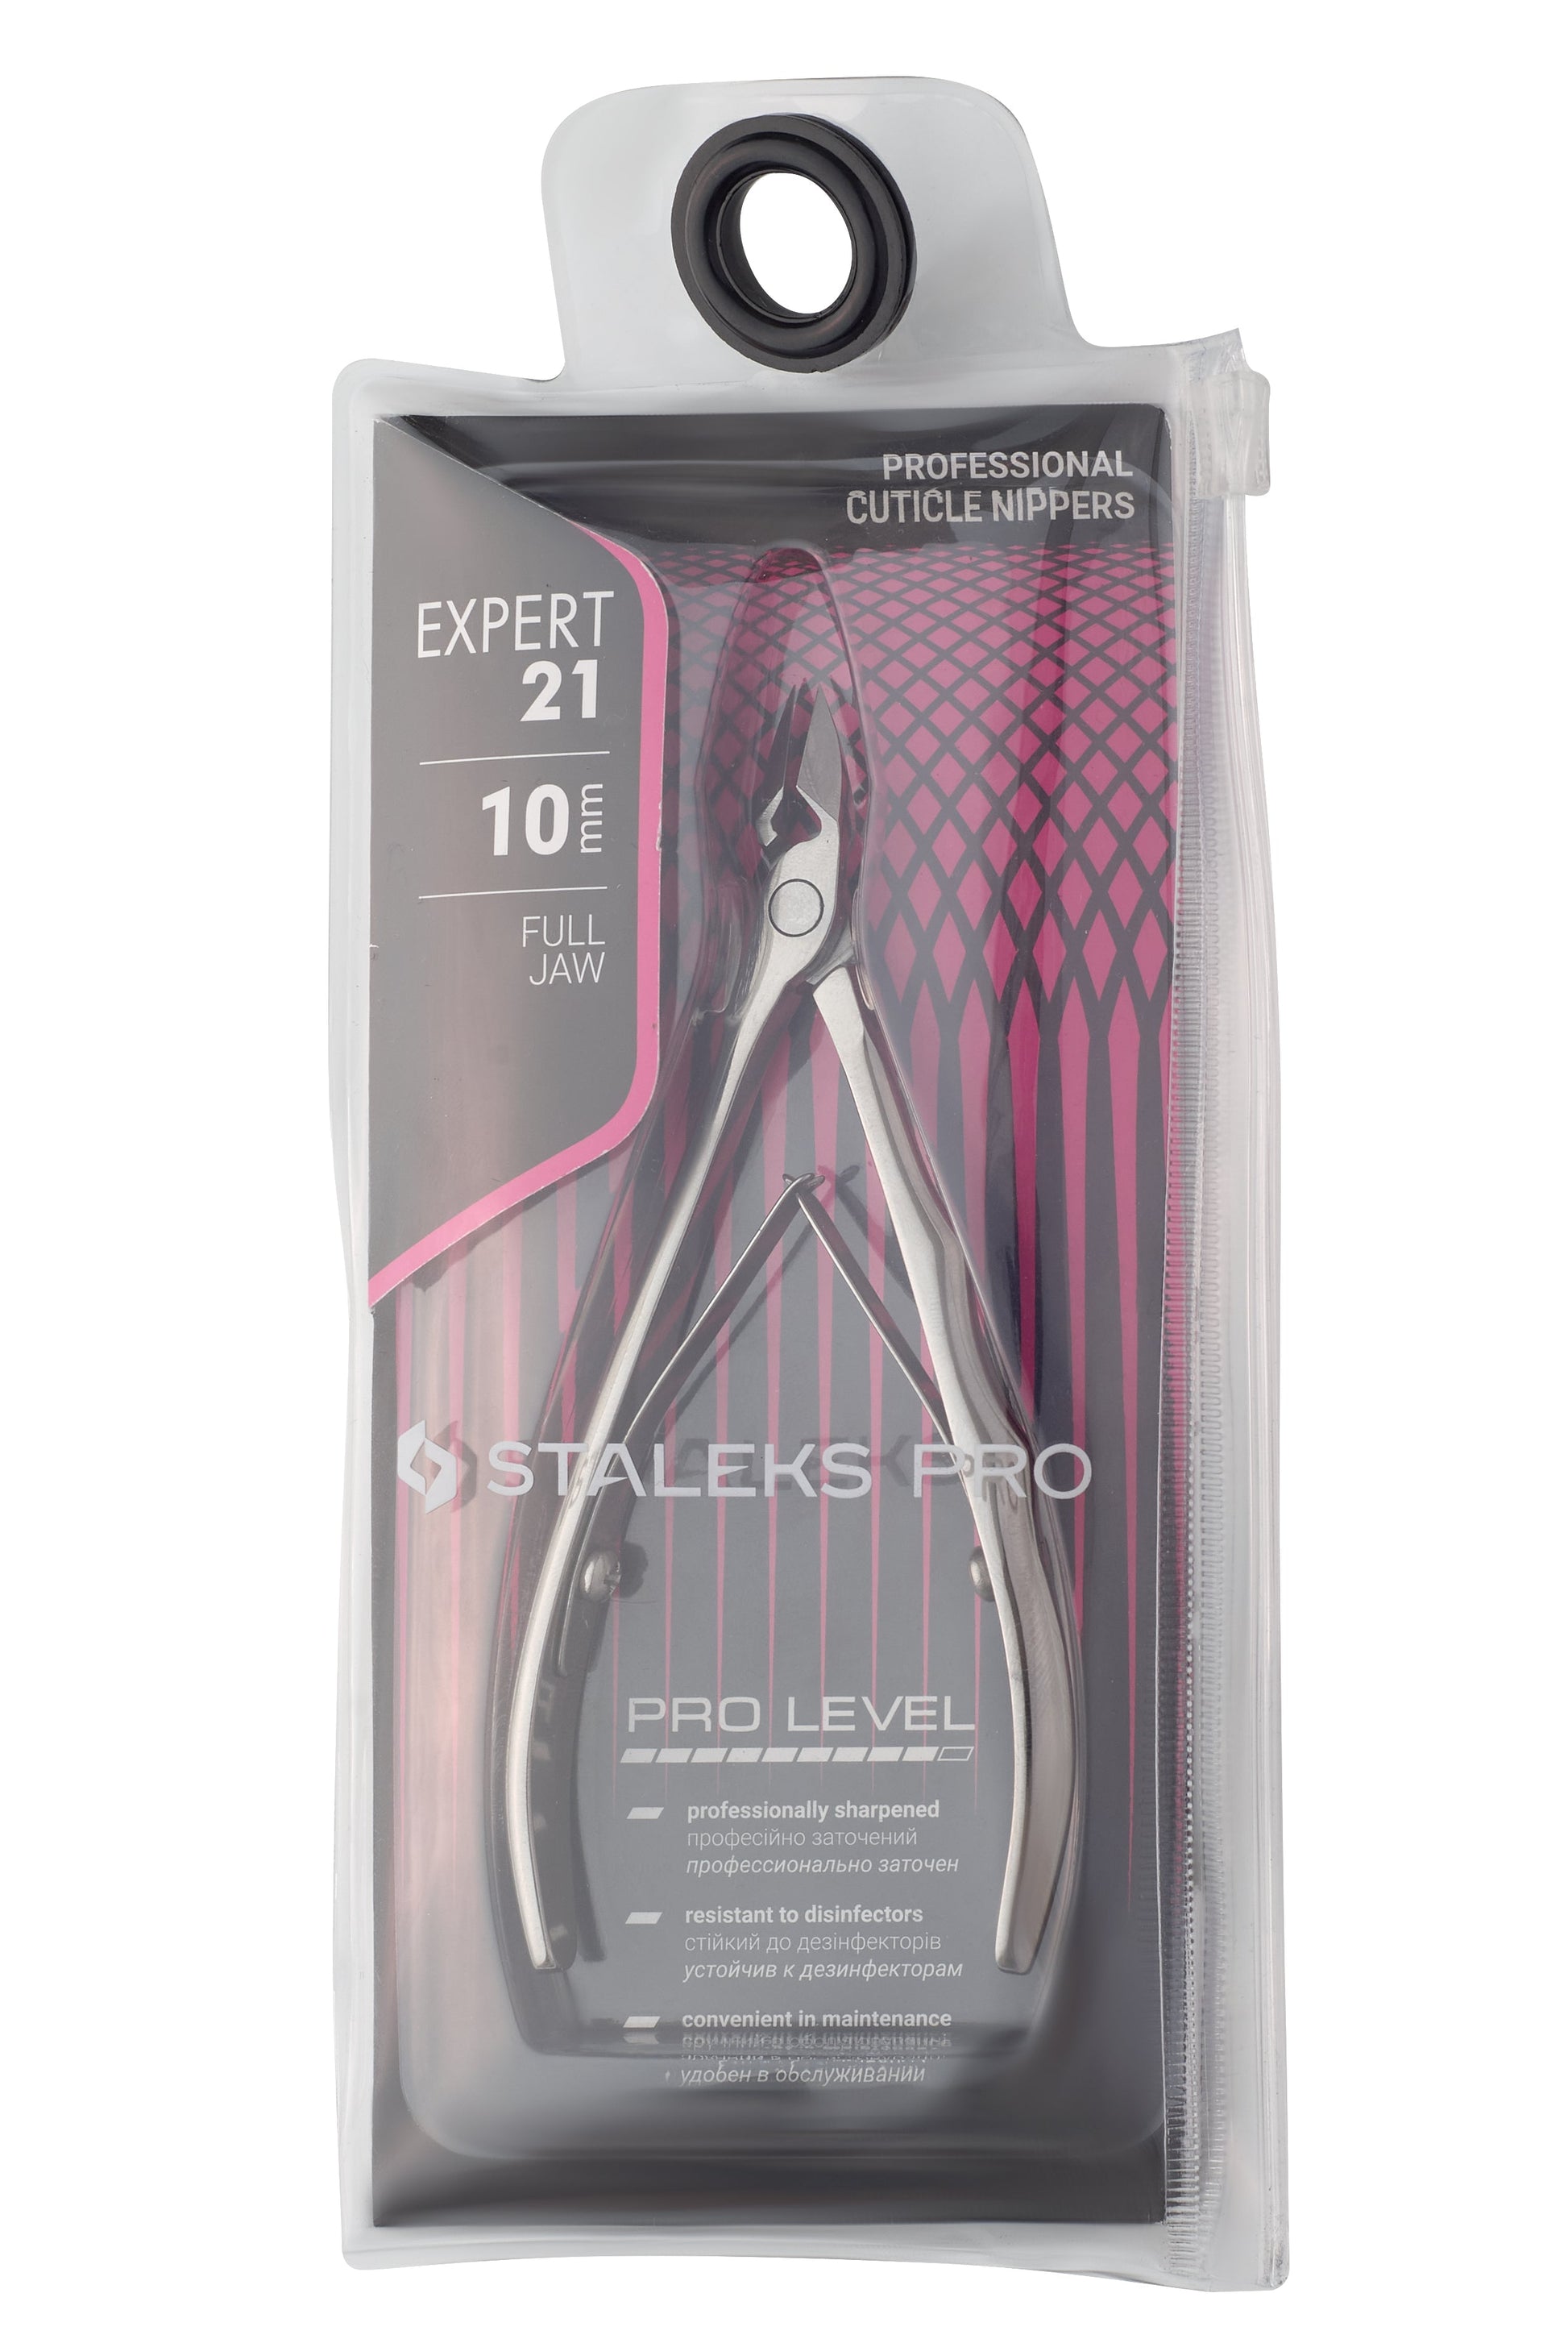 STALEKS-Cuticle nippers 21 10 mm EXPERT Professional-1